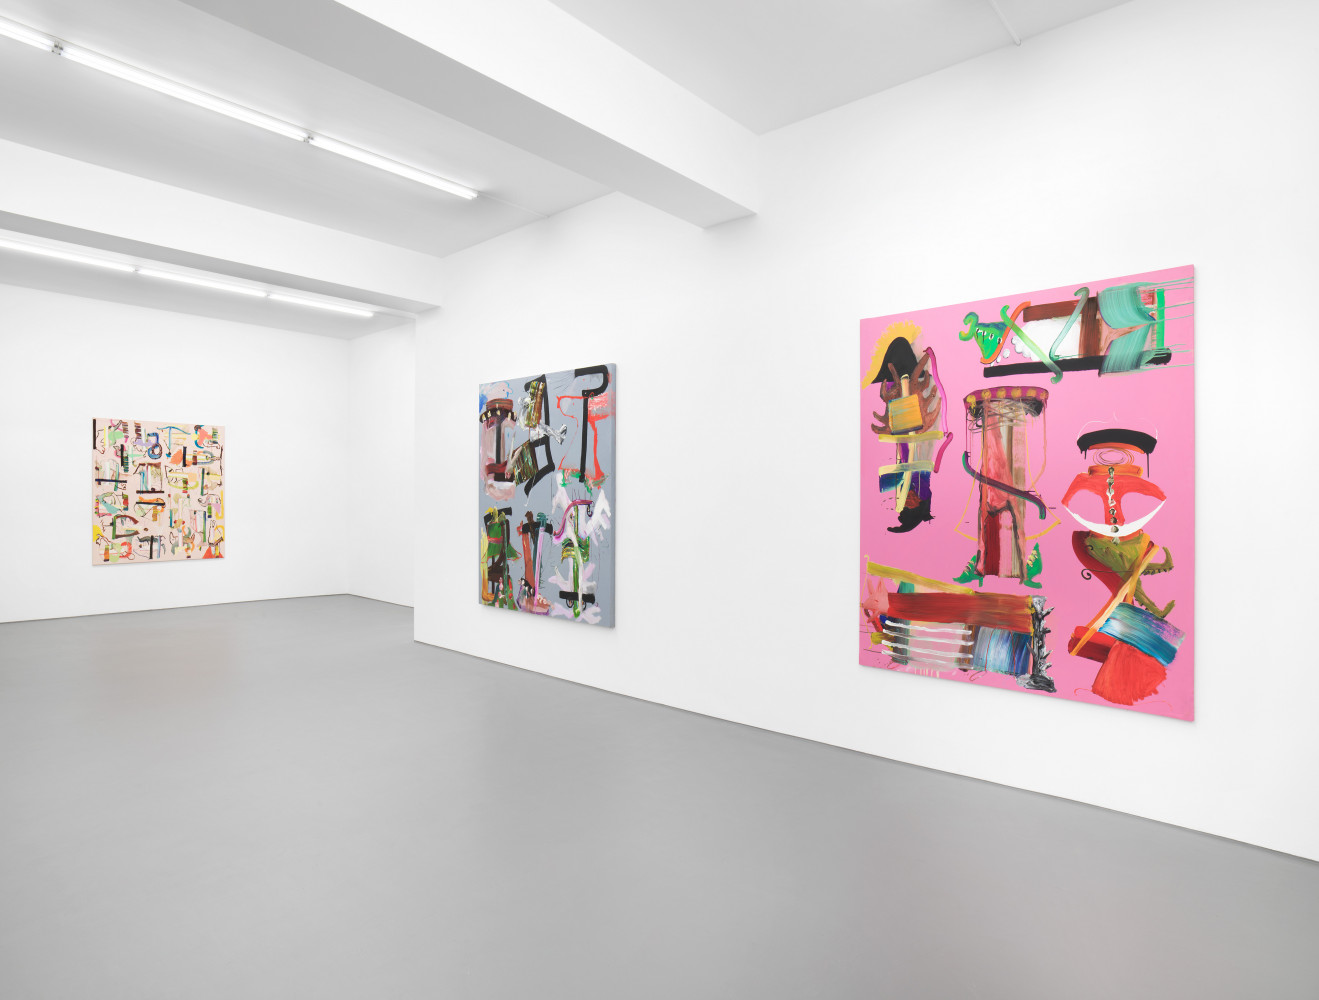 Fiona Rae, ‘Fiona Rae - Row Paintings’, Installation view, Buchmann Galerie, 2021